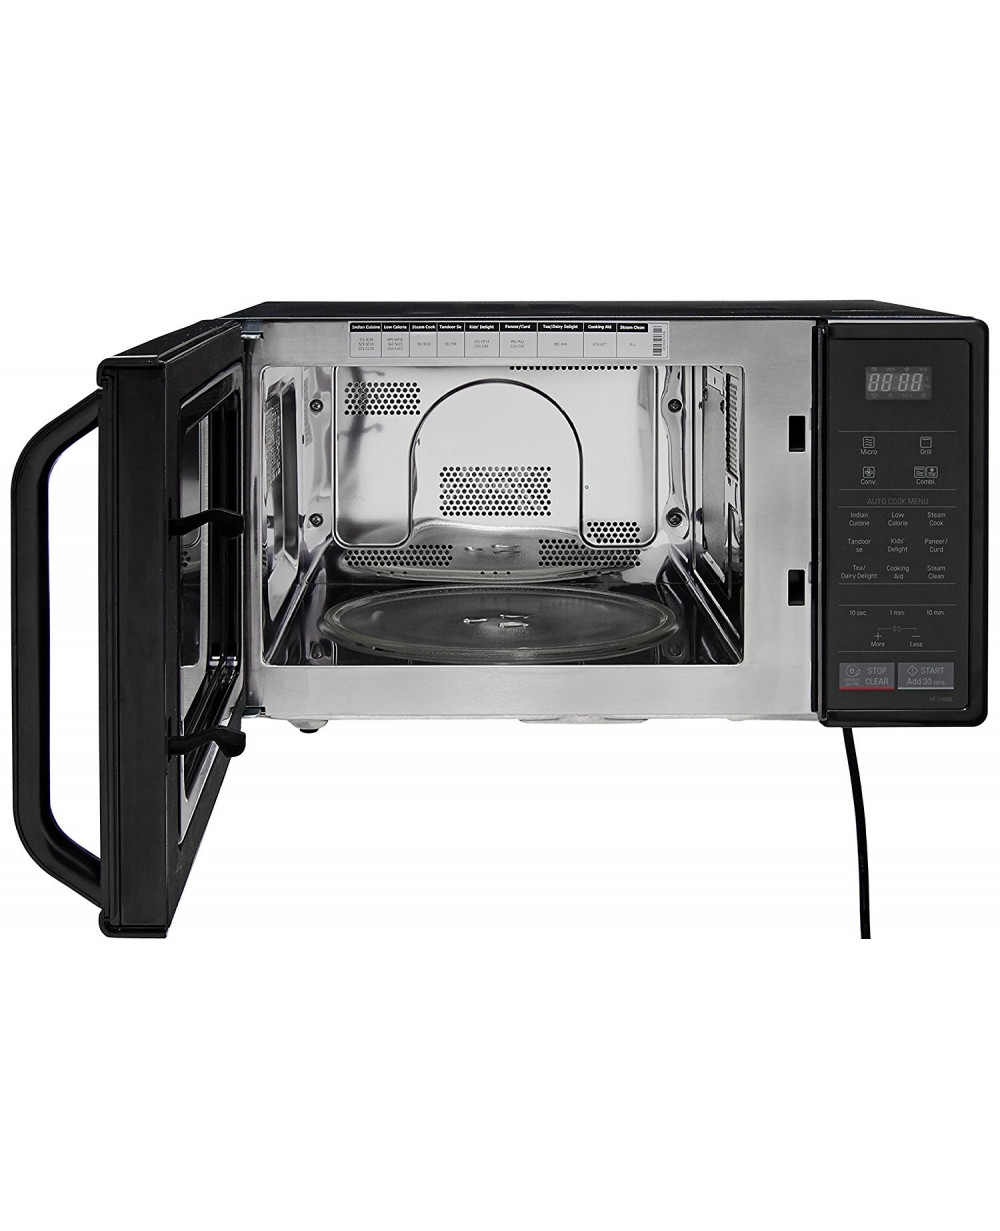 LG 21L Convection Microwave Oven MC2146BL Black